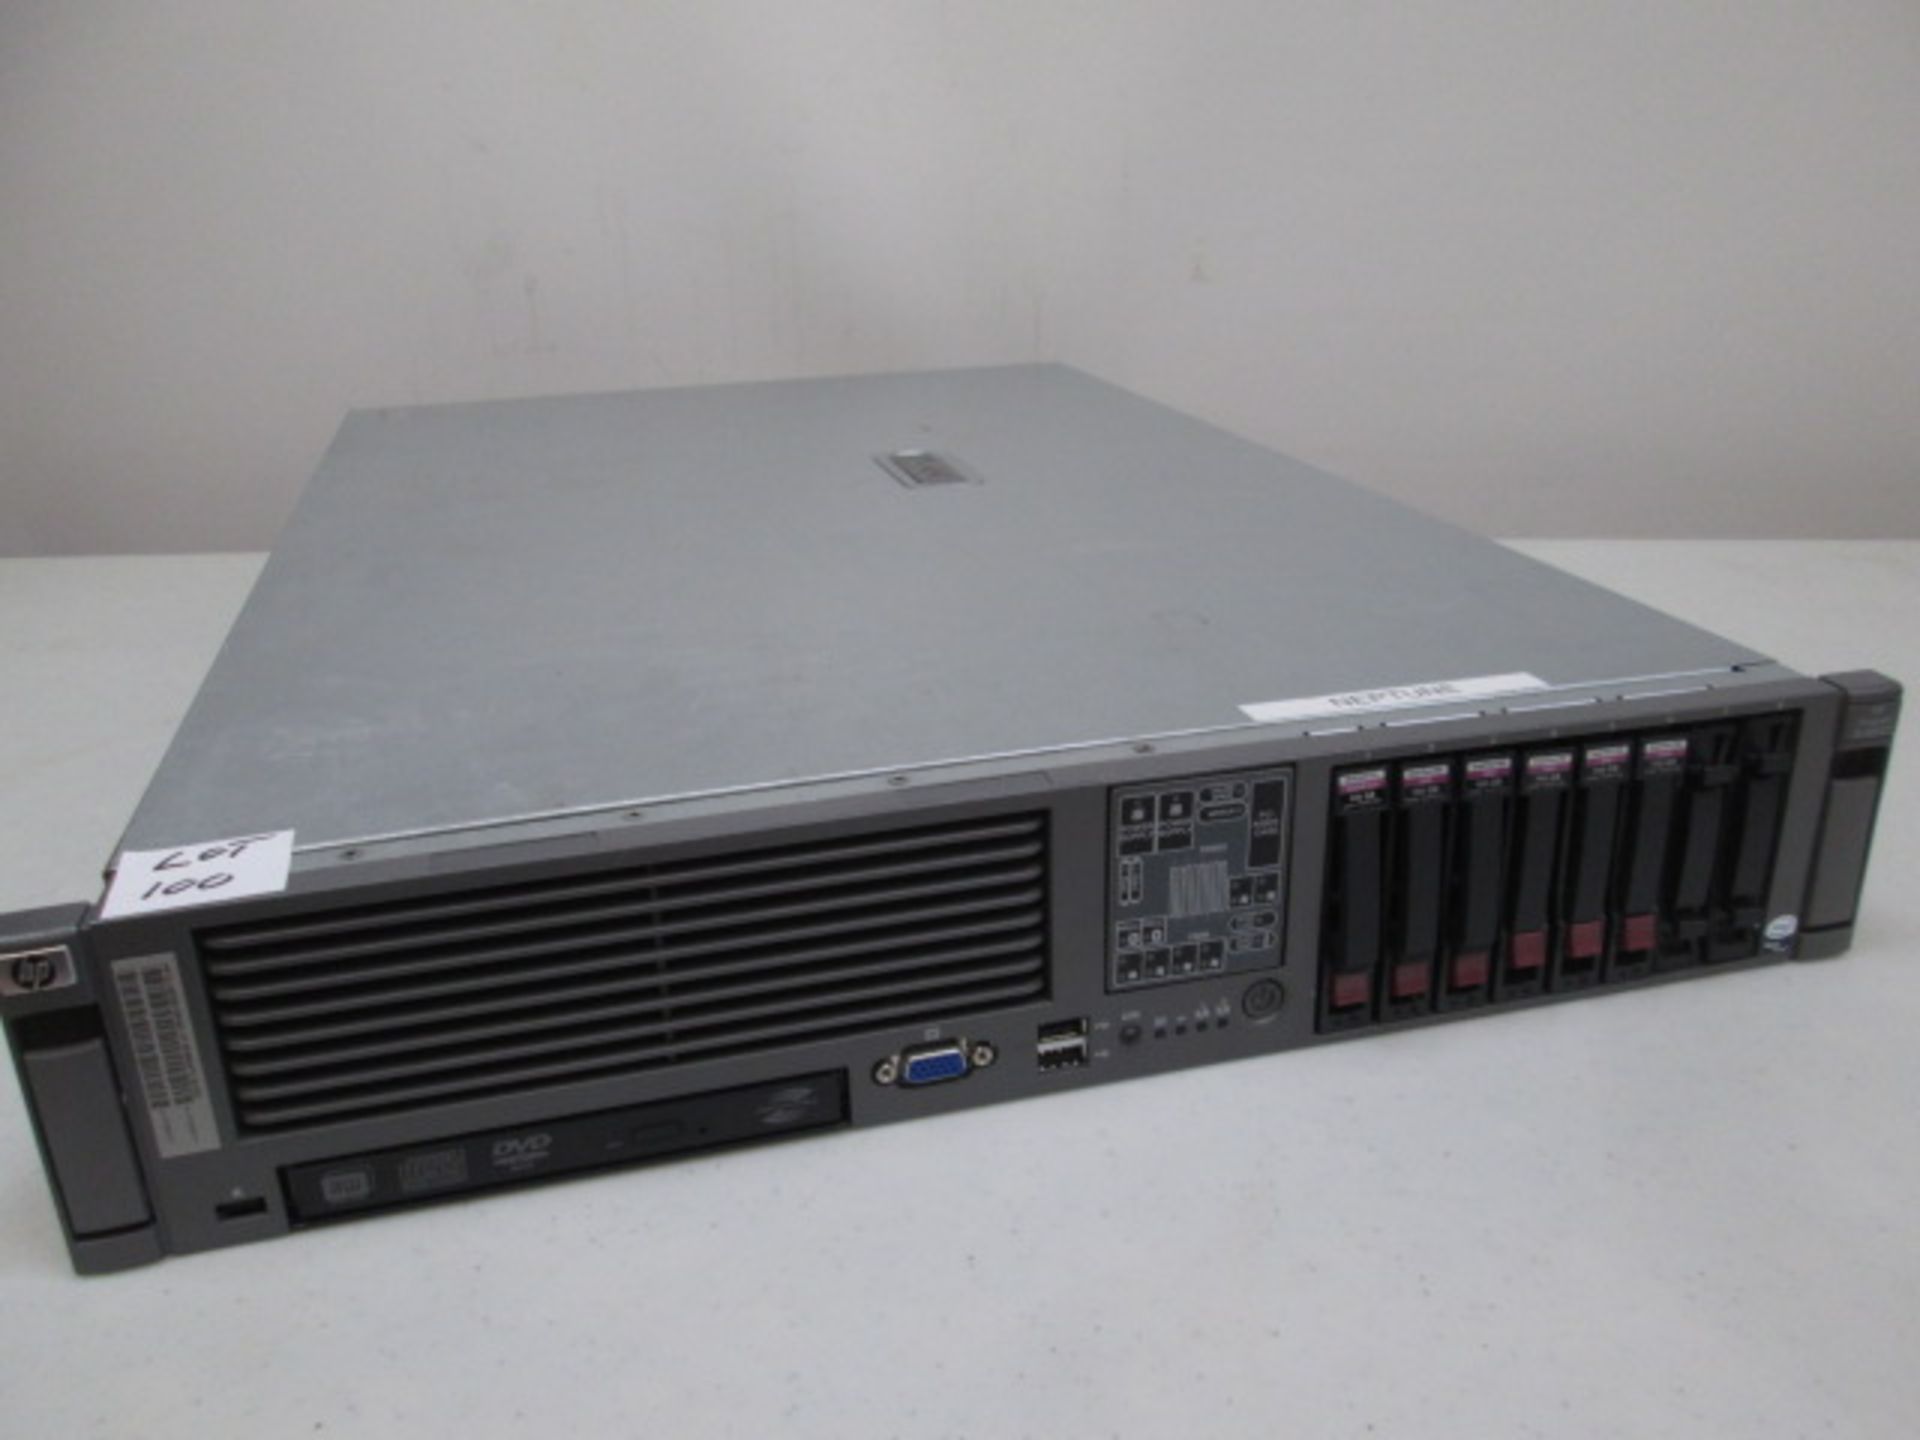 HP Proliant DL380 G5 Rack Mount Server. Intel Xeon CPU E5420 @2.5ghz, 16gb RAM. Hard Drives